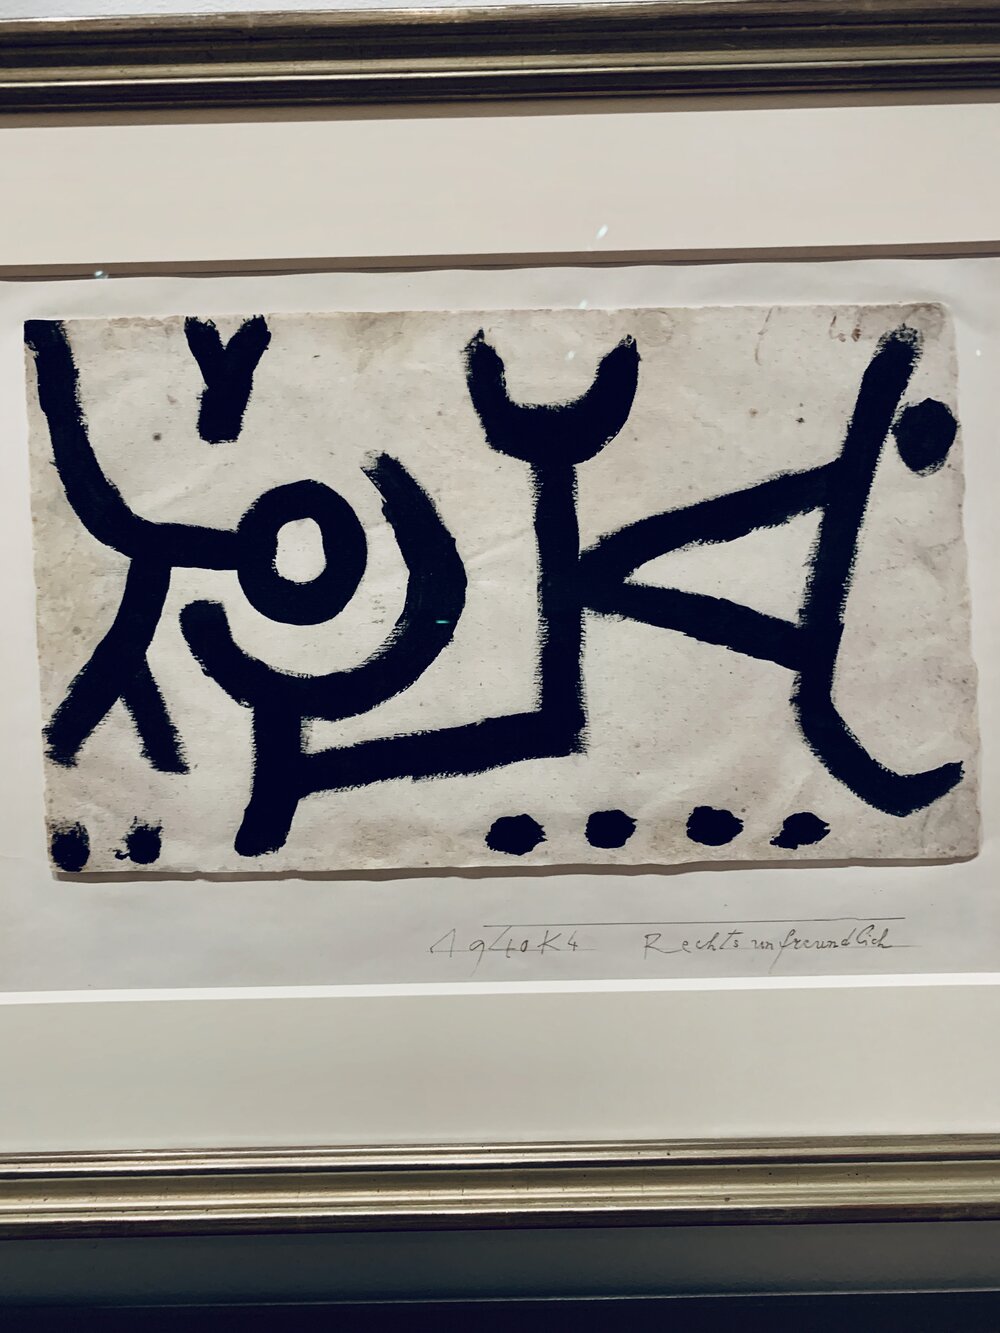 Rechts unfreundlich by Paul Klee